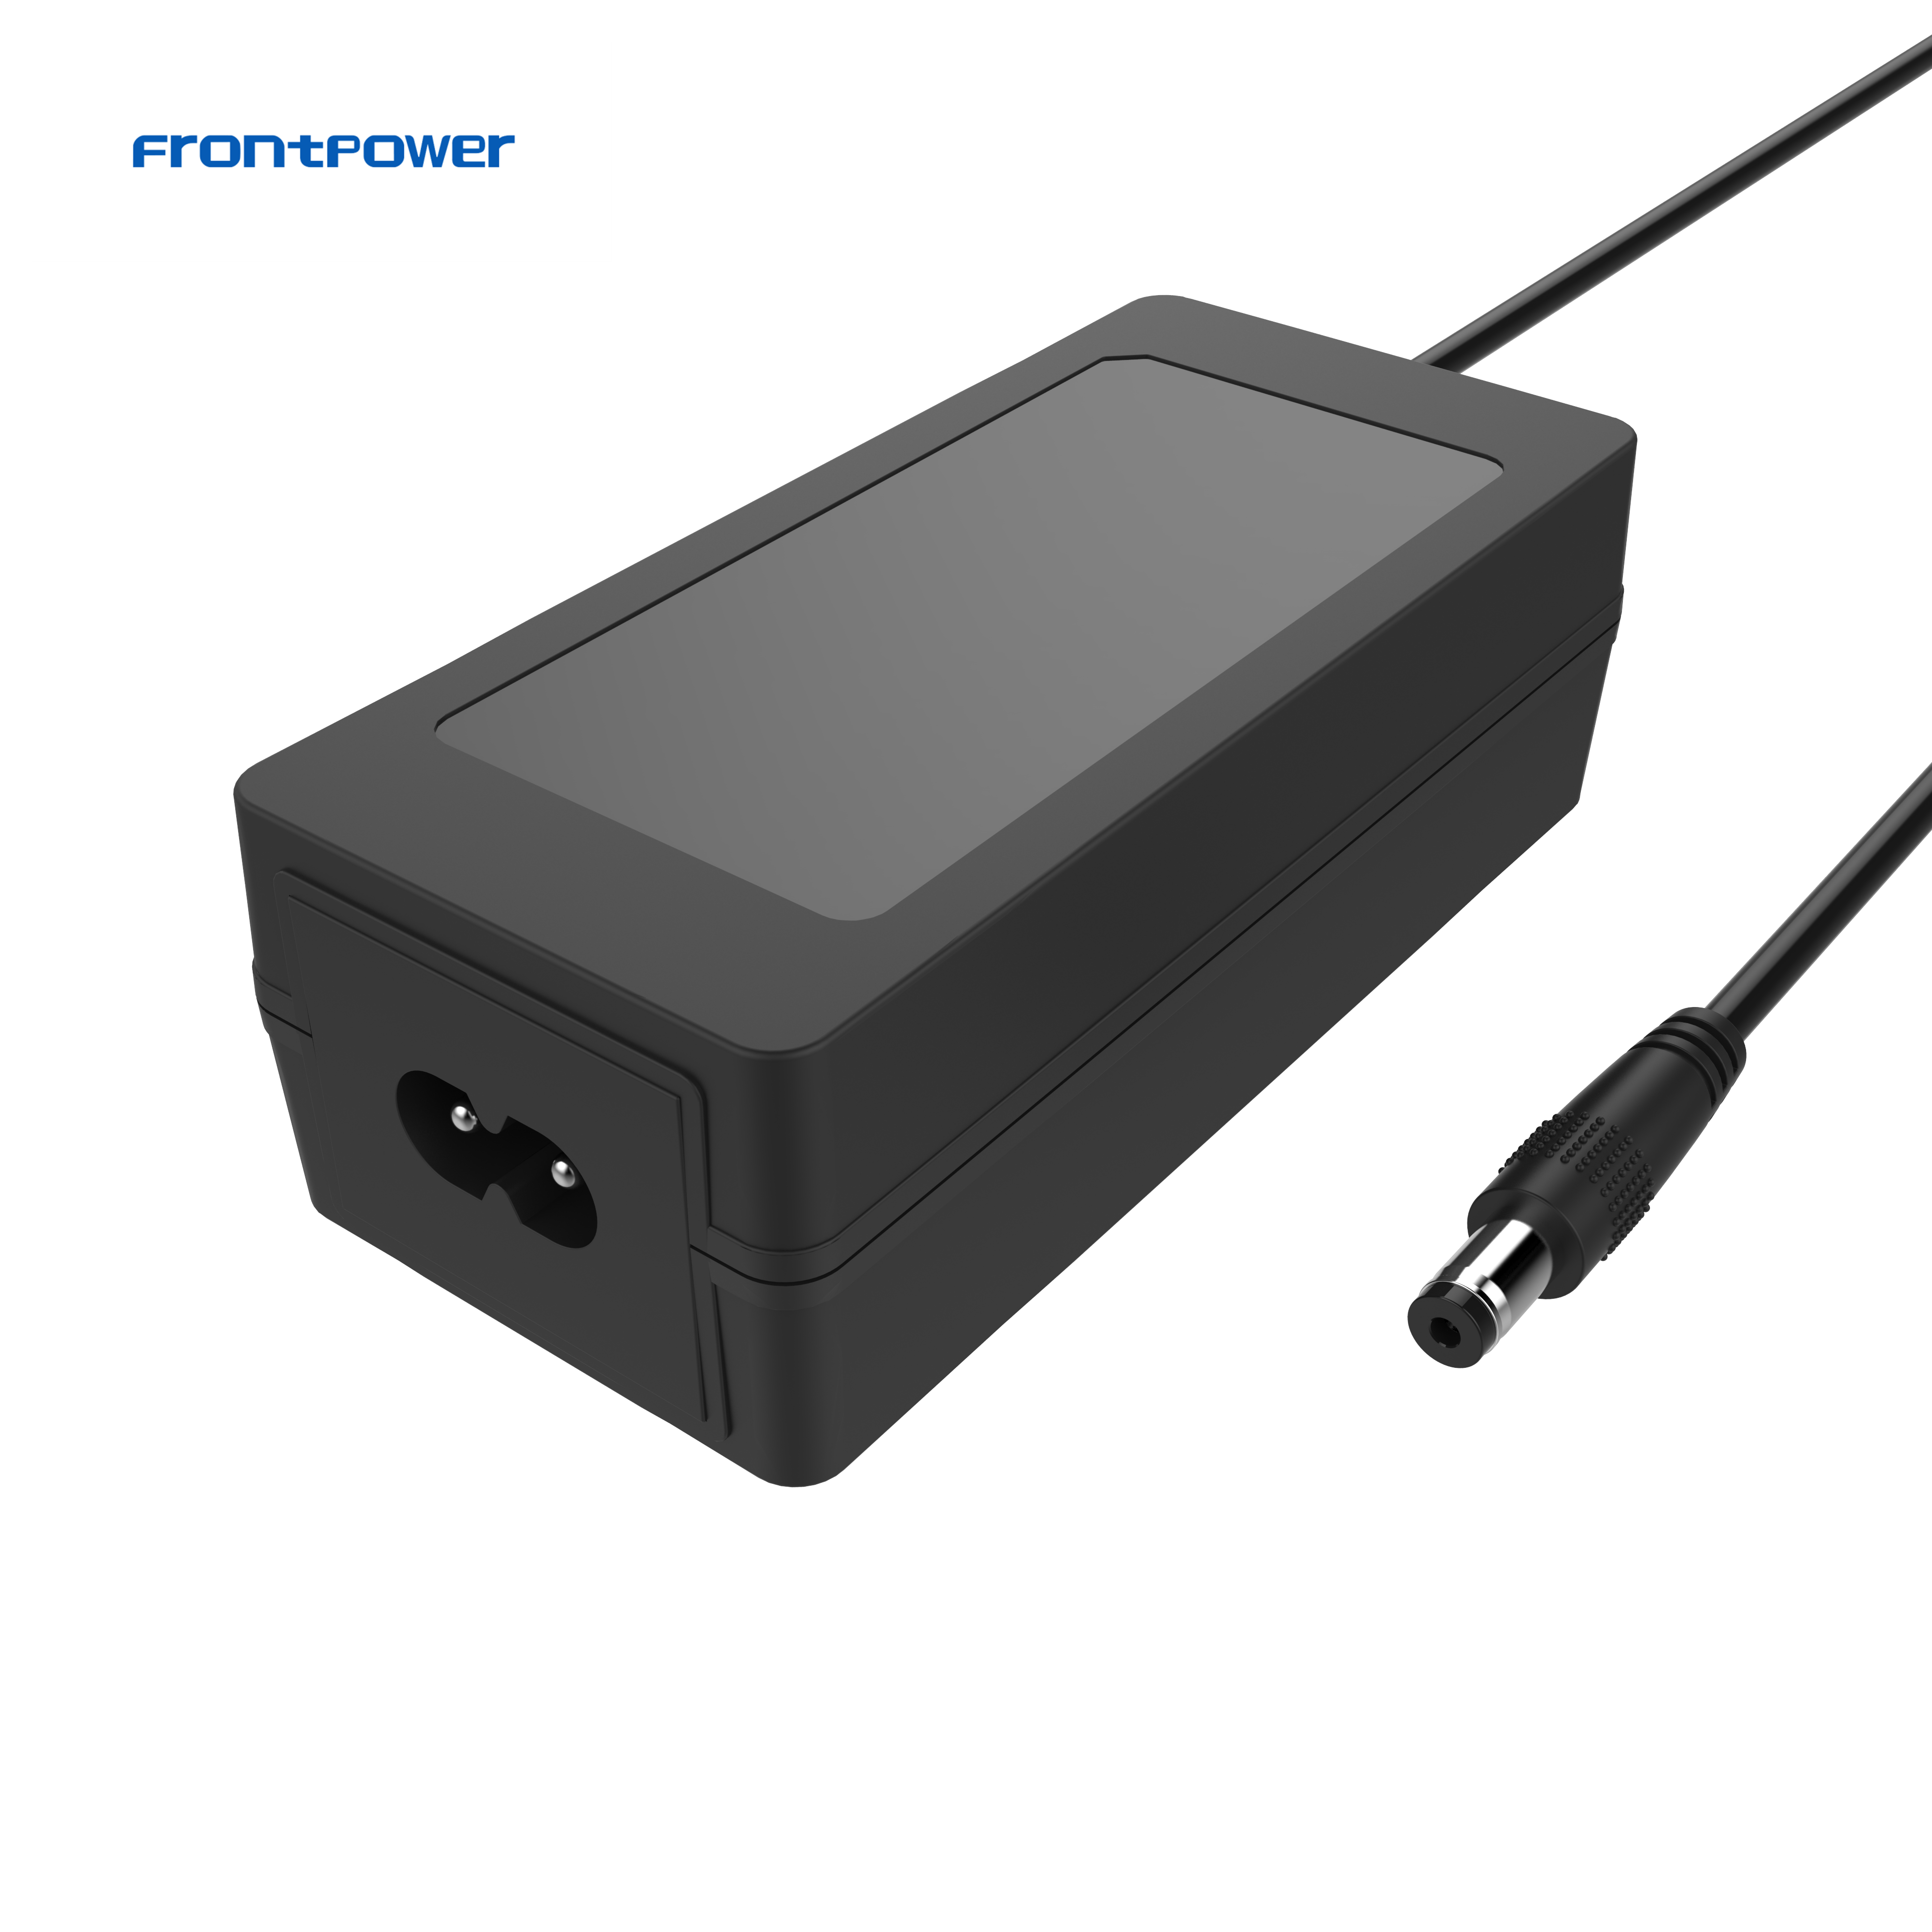 5V 9V 9.3V 12V 15V 24V SMPS Desktop Power Adapter Supply Switch ACDC Charger for Laptop POS Machine Printer